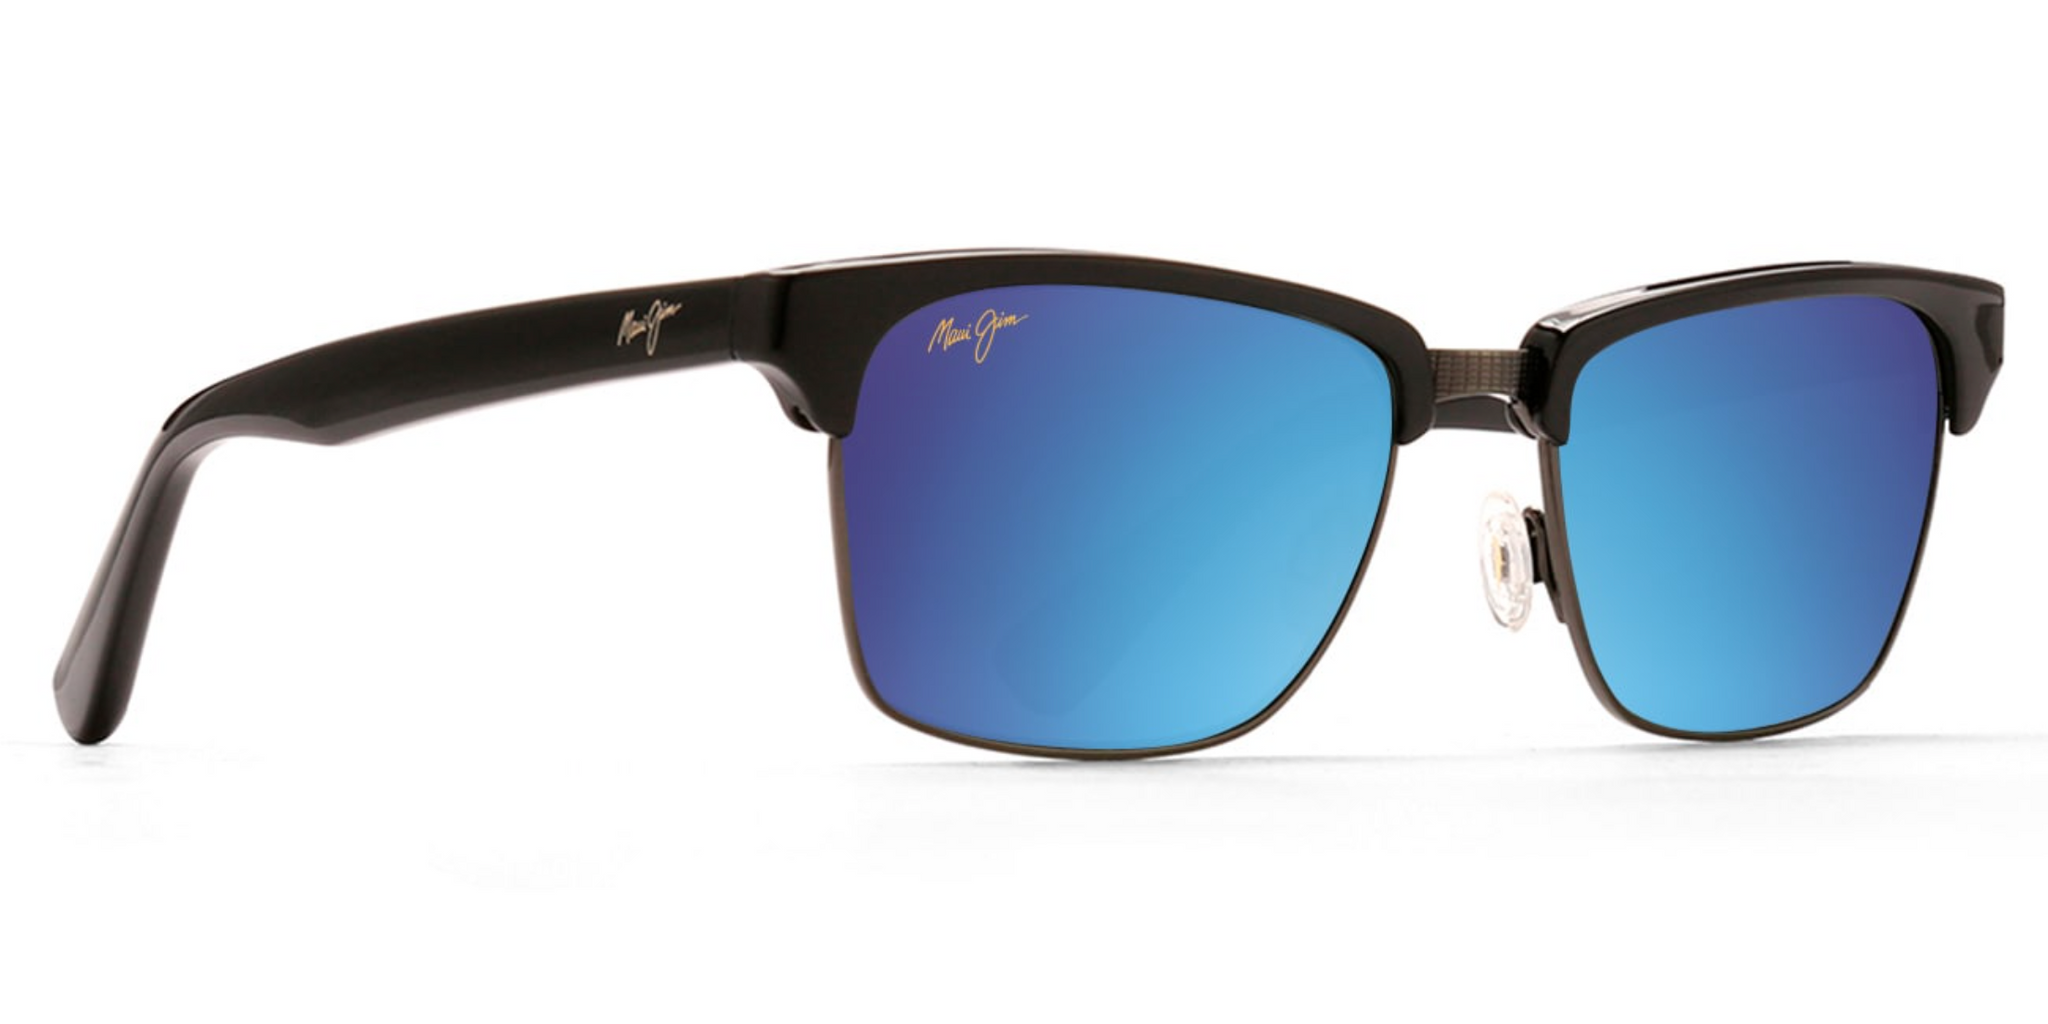 Maui Jim Kawika 257 Sunglasses: H257-16C, RM257-17C, 257-17C, B257-05CR -  Flight Sunglasses